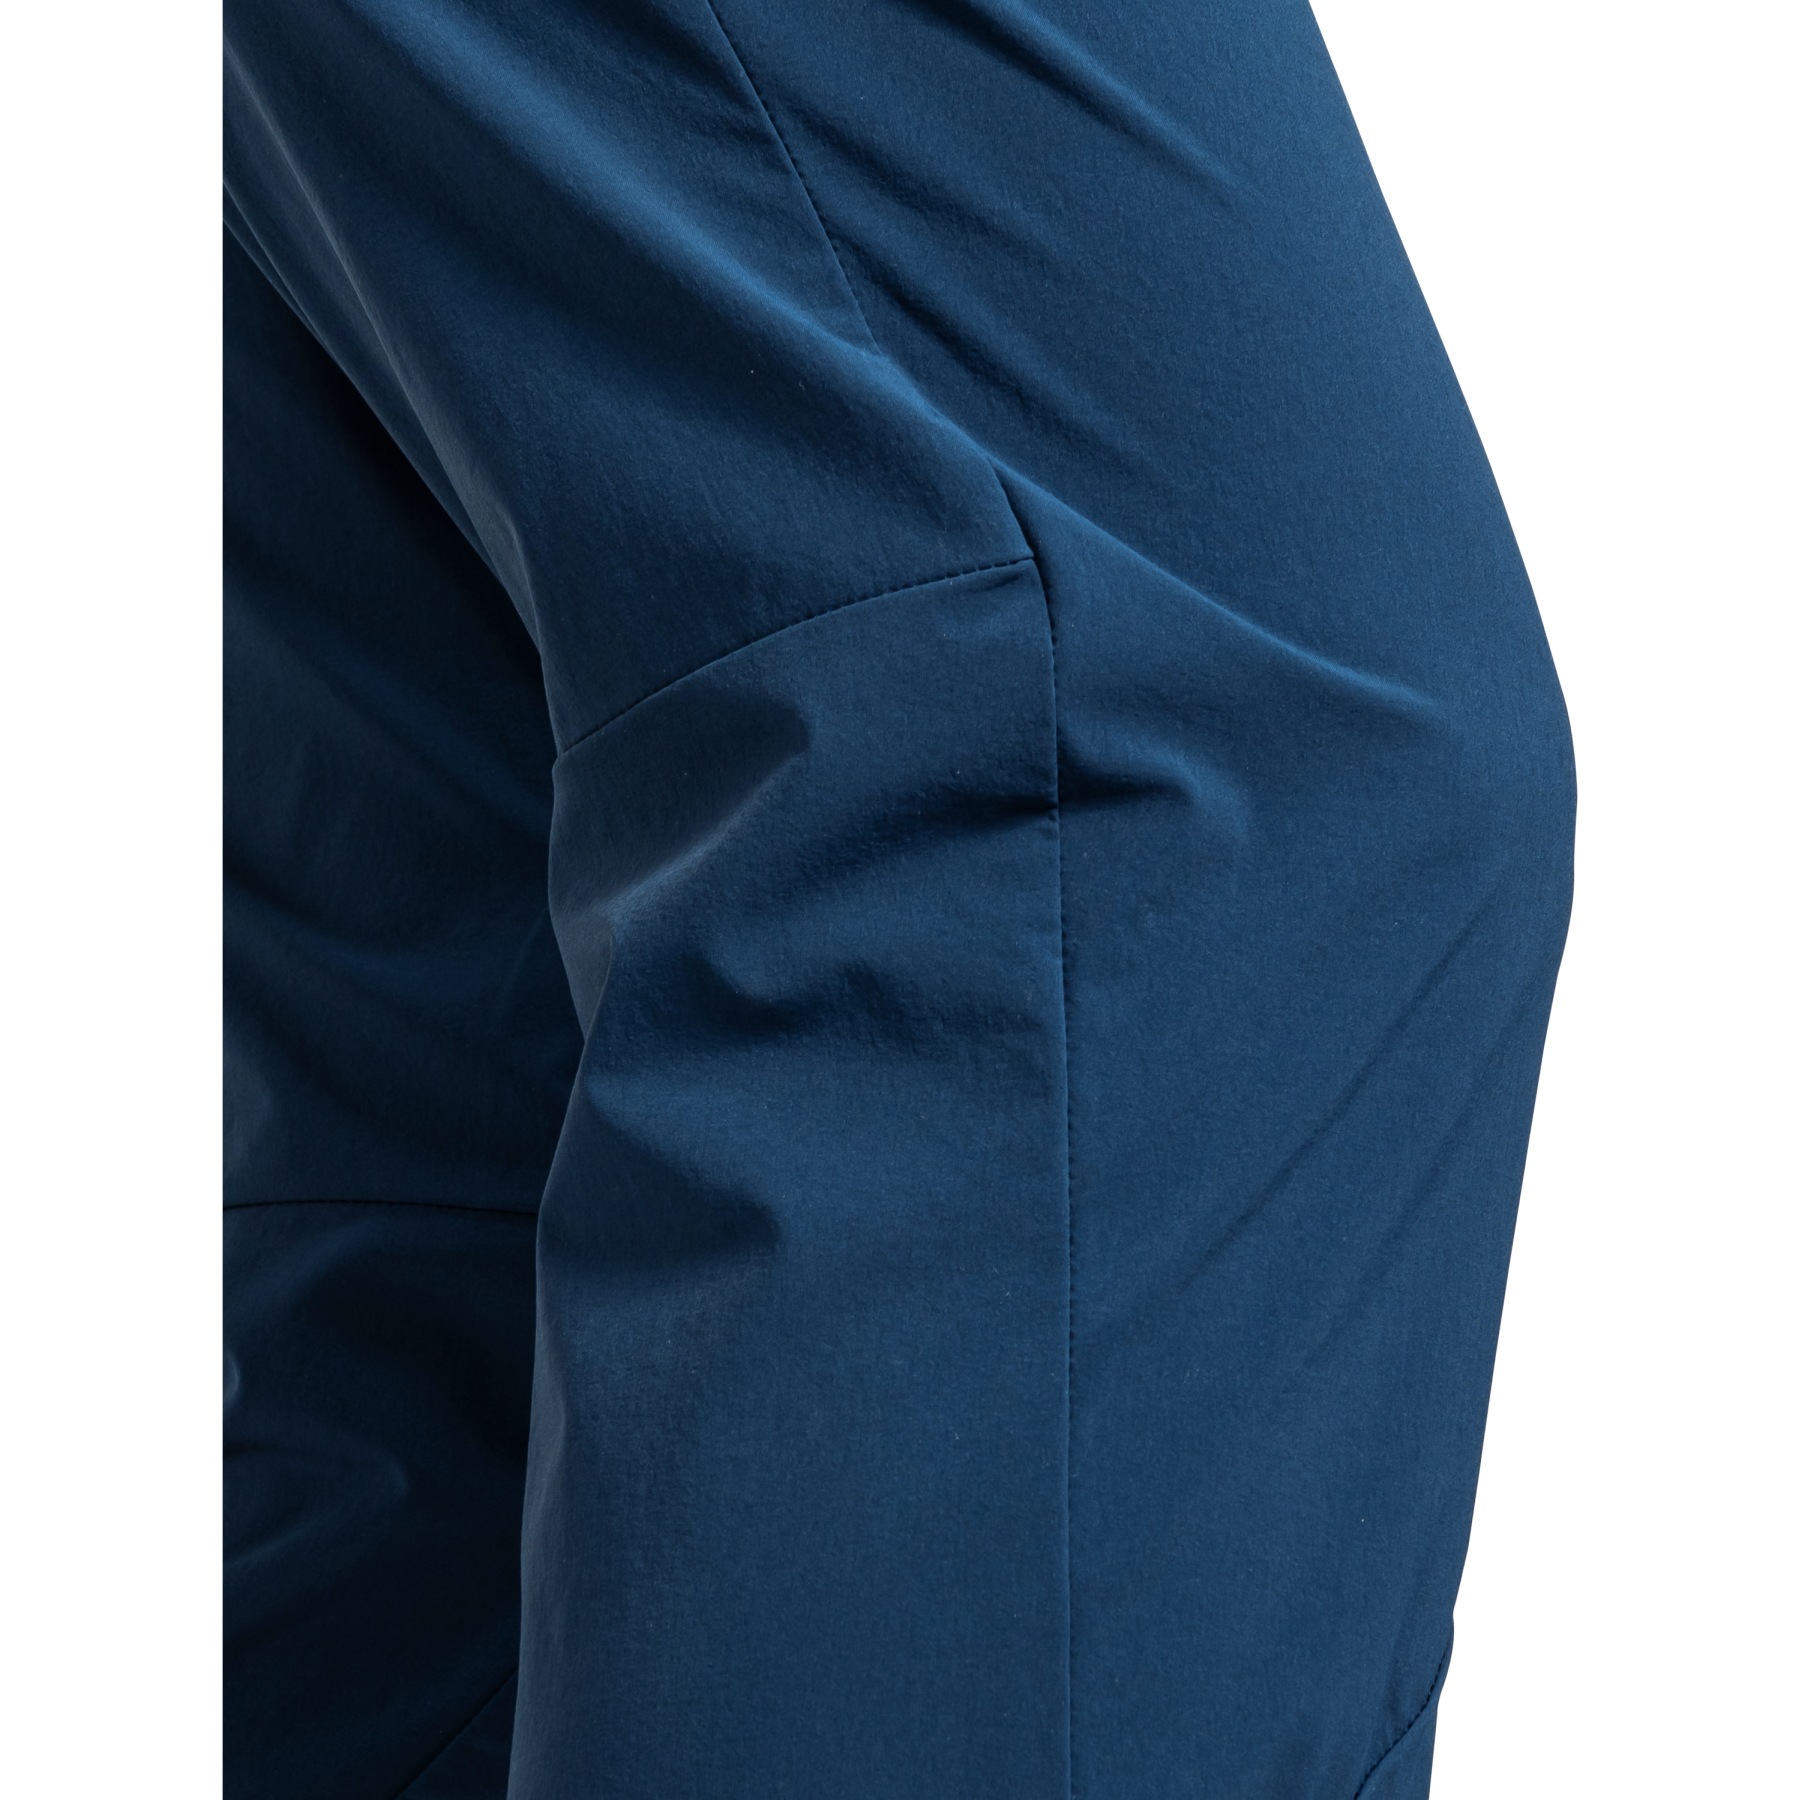 Schöffel Hestad Pants Women - Regular - dress blues 8180 | BIKE24